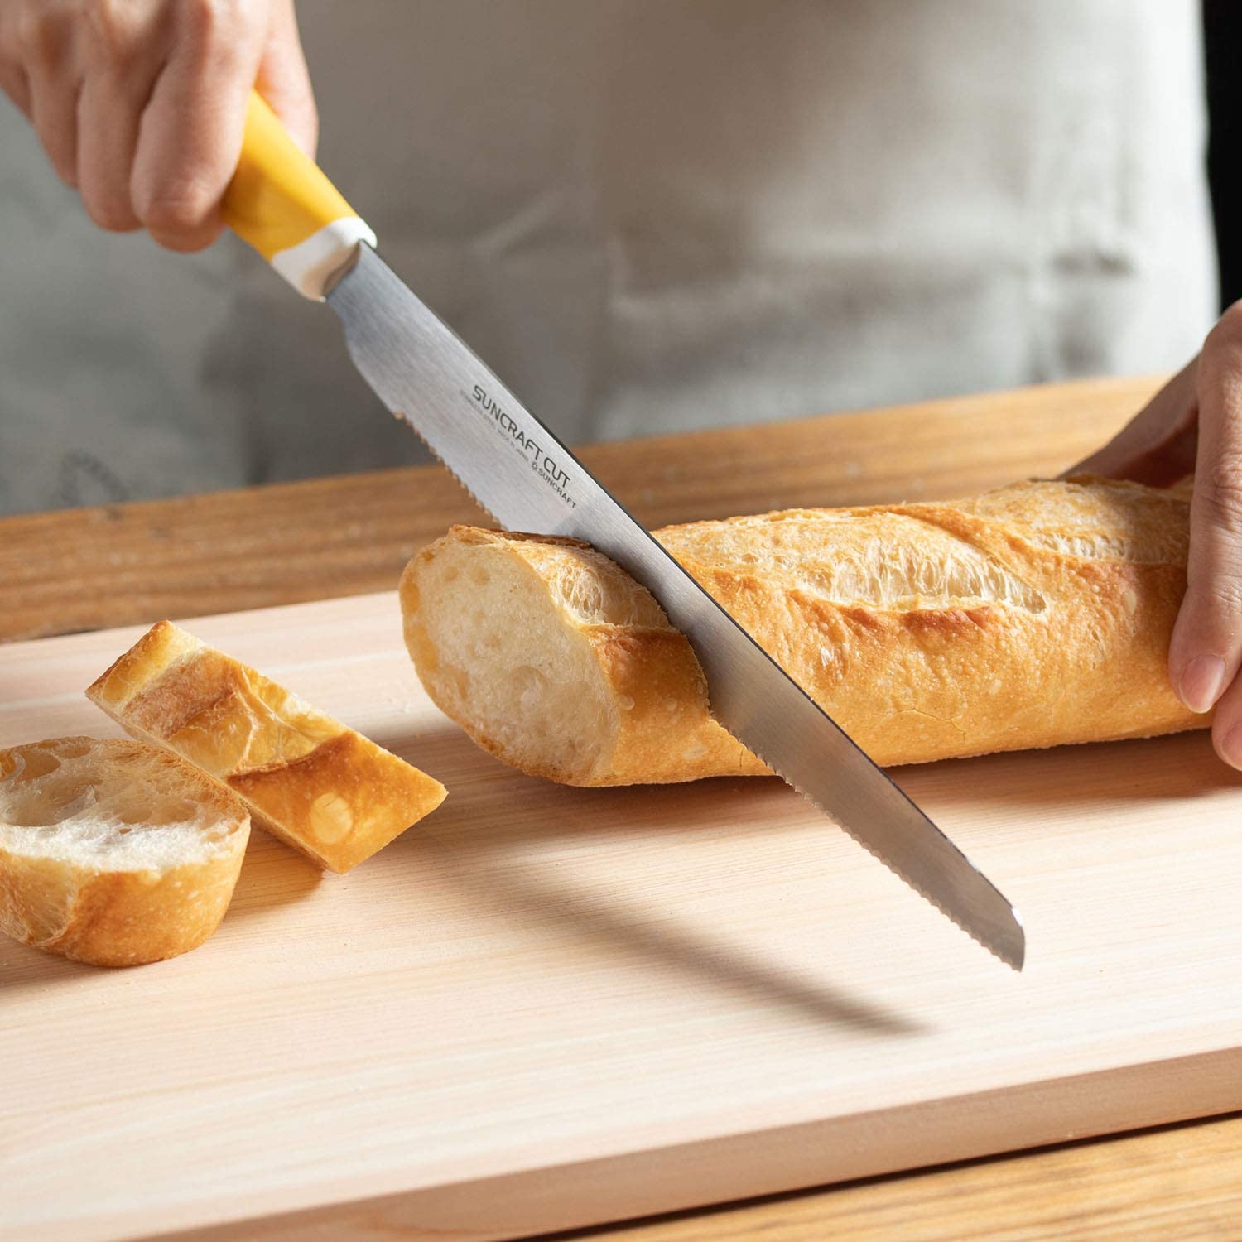 SUNCRAFT(サンクラフト) スムーズパン切りナイフ HE-2101の商品画像4 